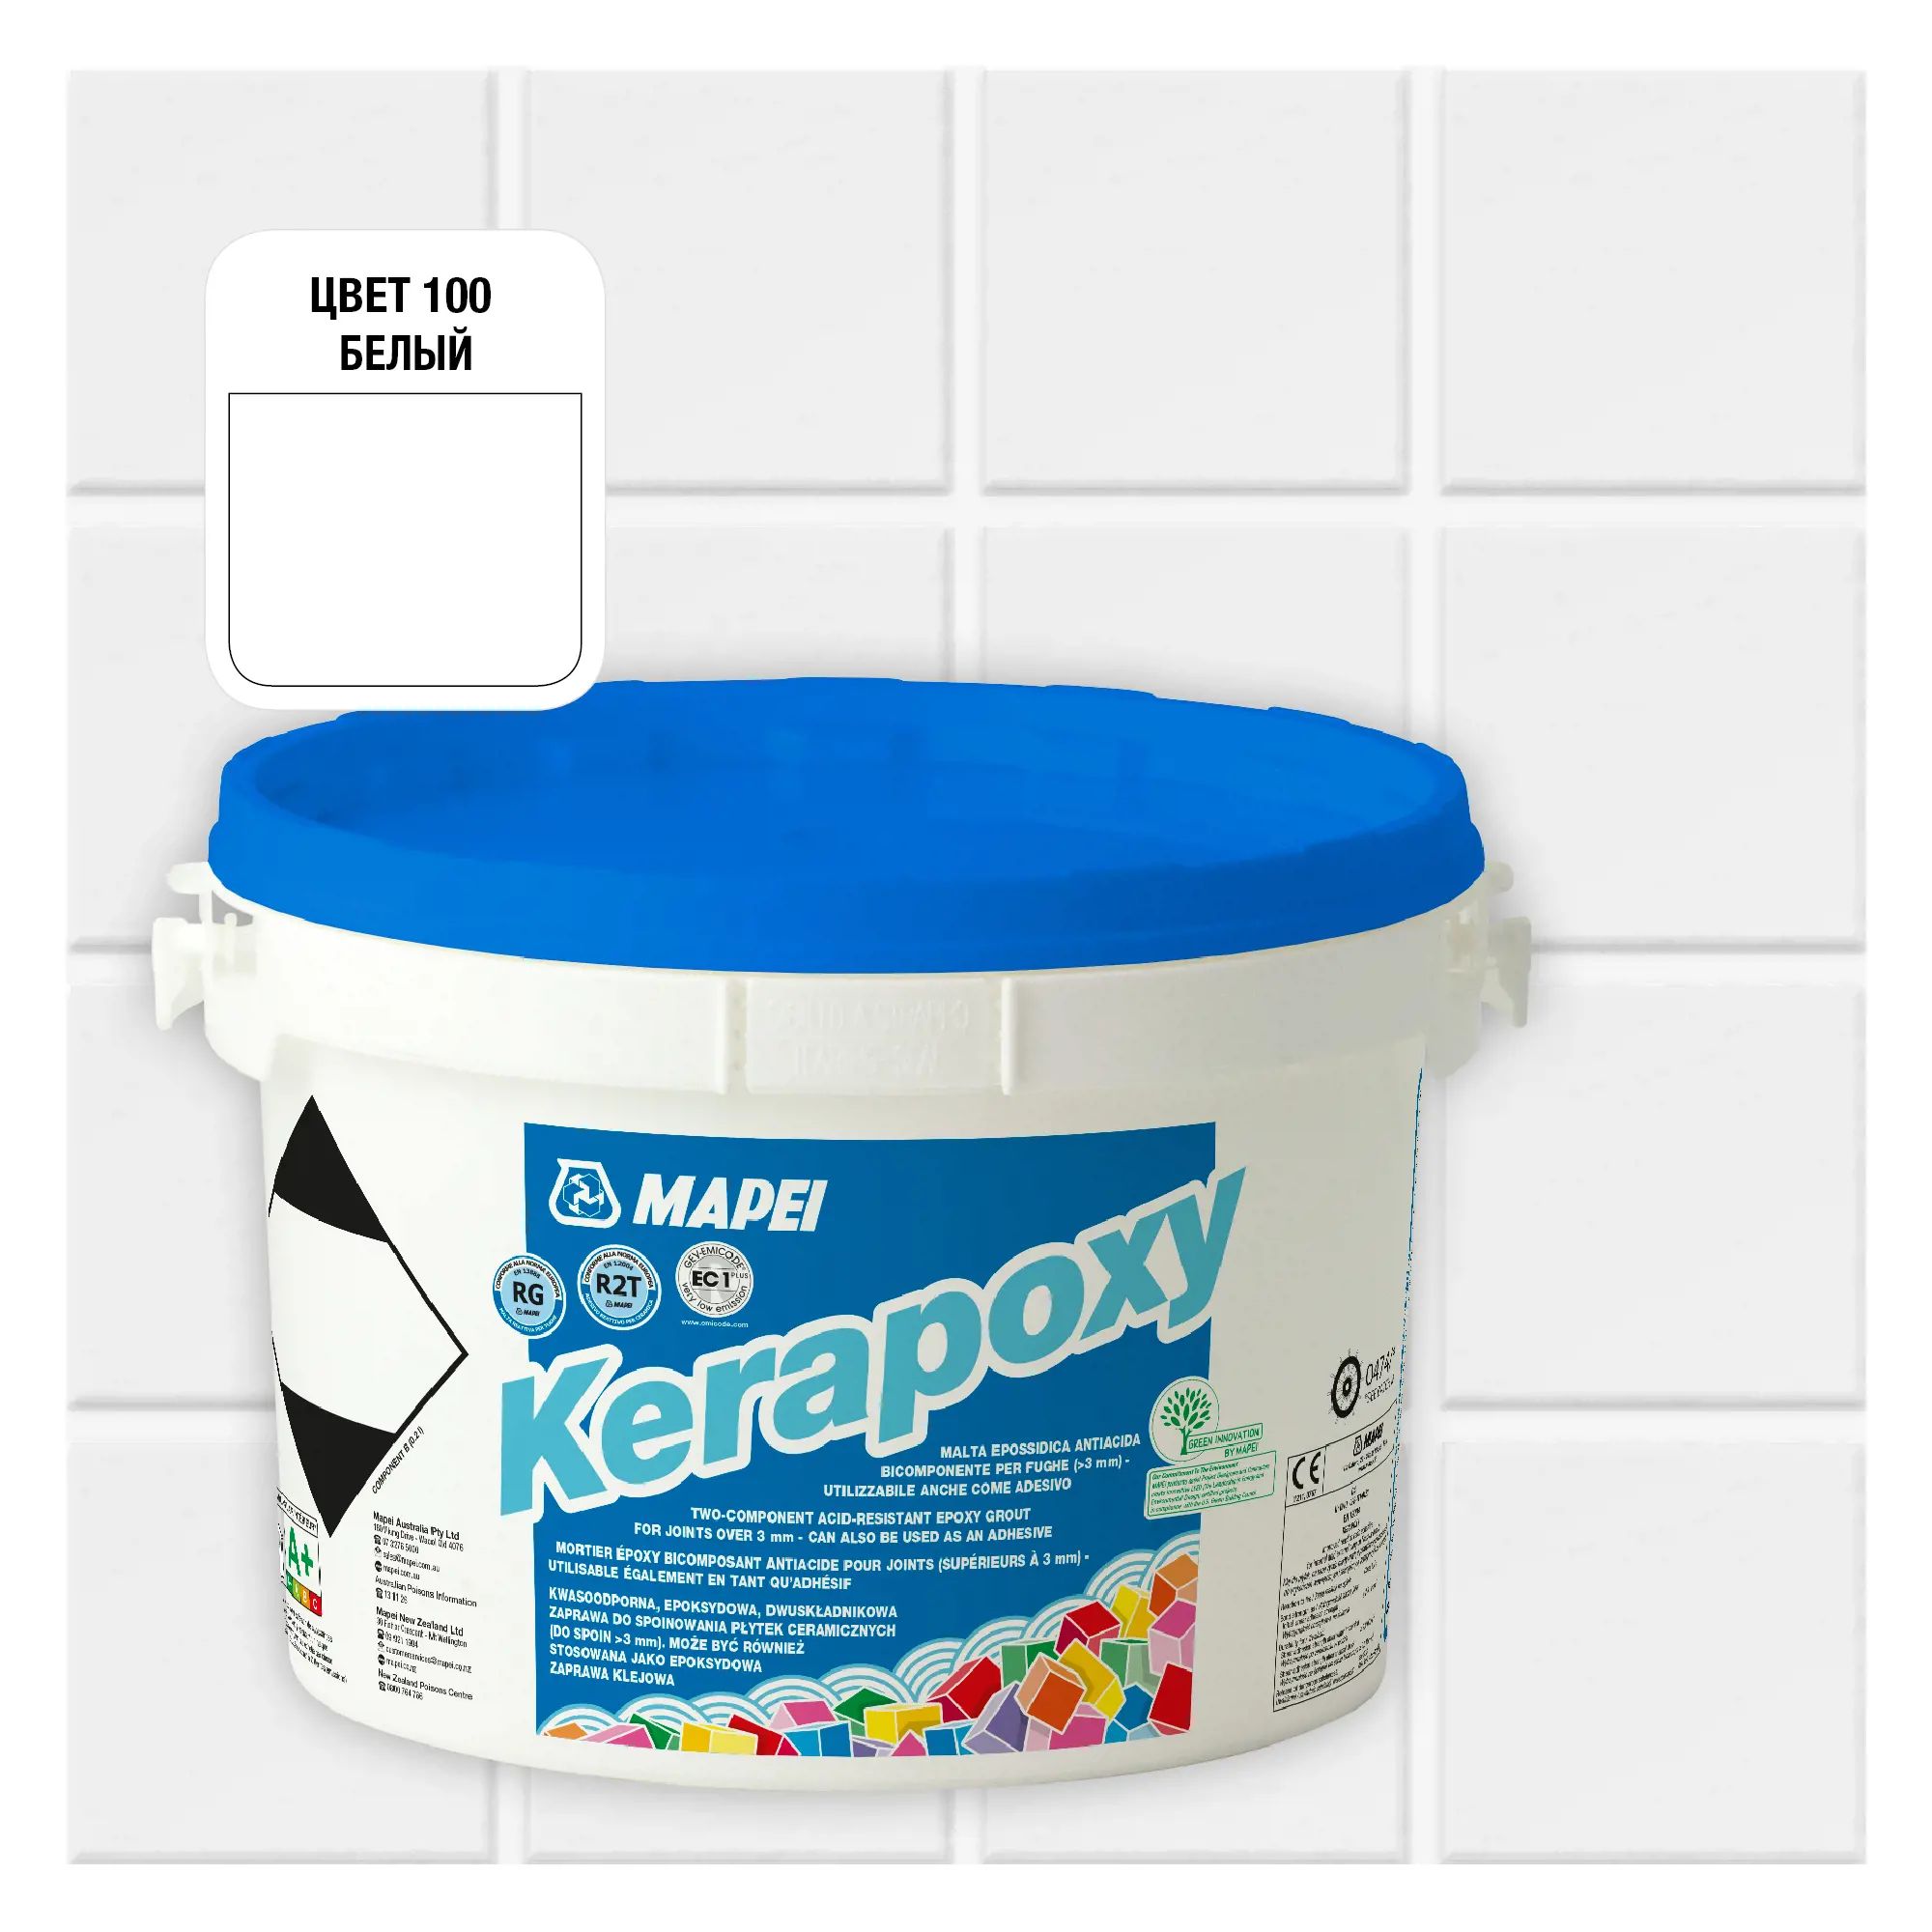 Затирка Mapei Kerapoxy 100 Белый, 2кг затирка для швов mapei ultracolor plus 259 с водоотталкивающим и антигрибковым эффектом орех 2кг 6667